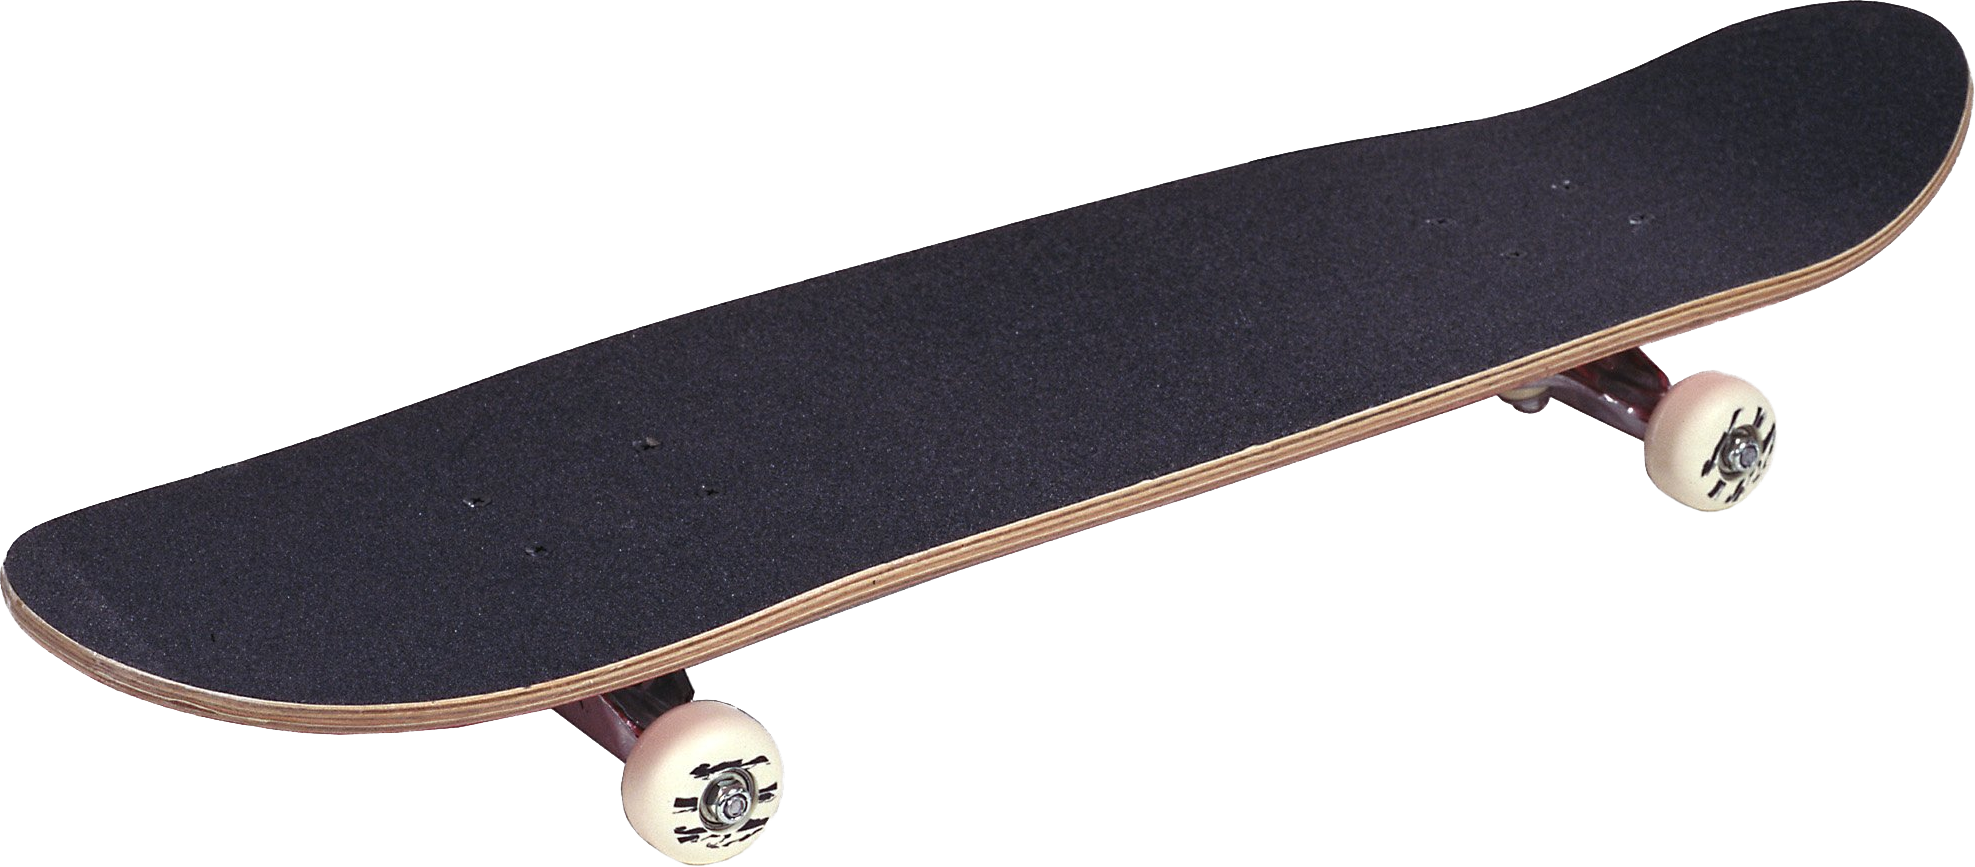 Skateboard Free Download PNG HQ PNG Image